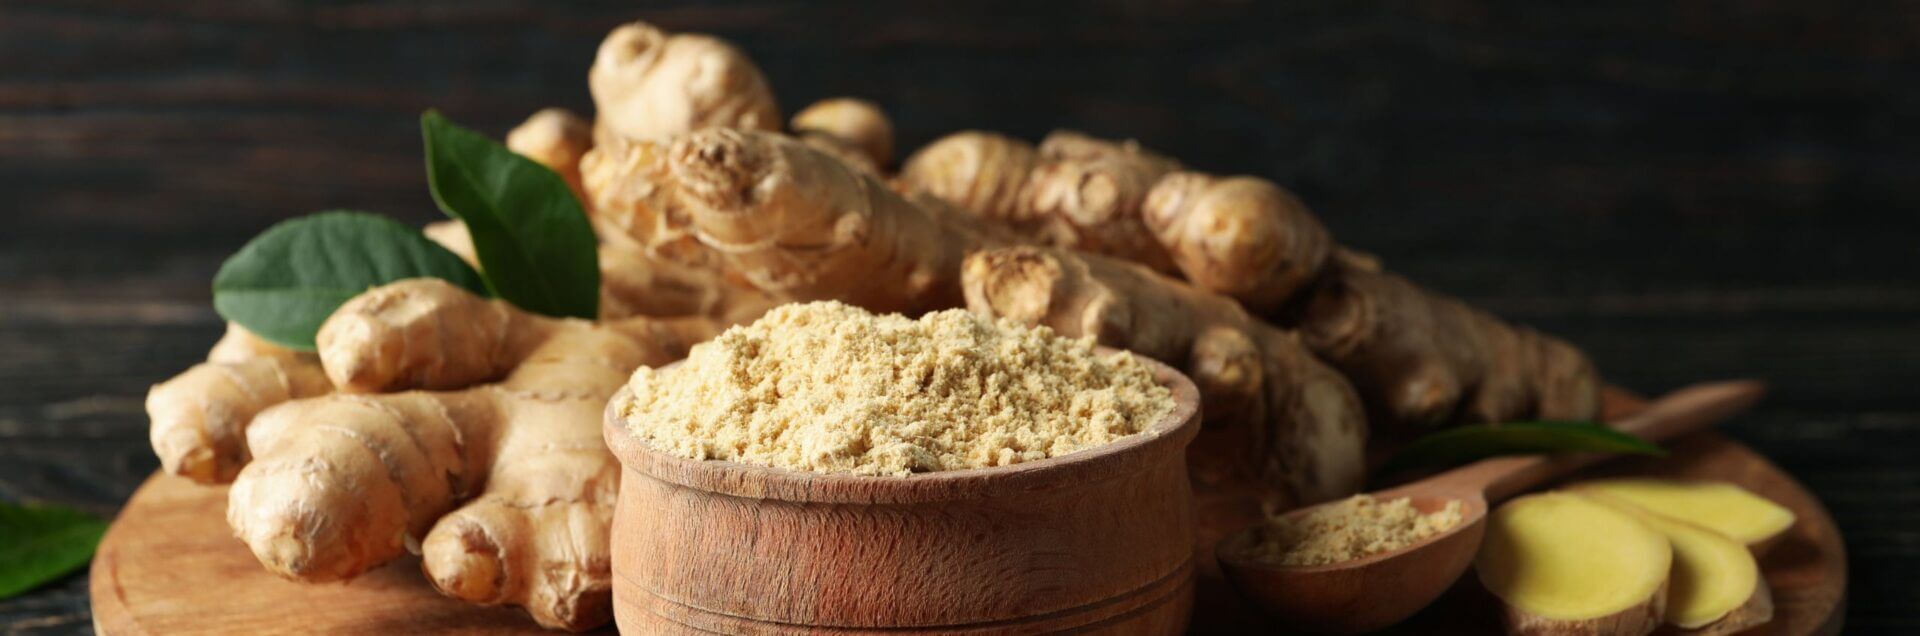 Ginger Benefits Through Herbal Formulas -ground ginger in bowl and fresh ginger